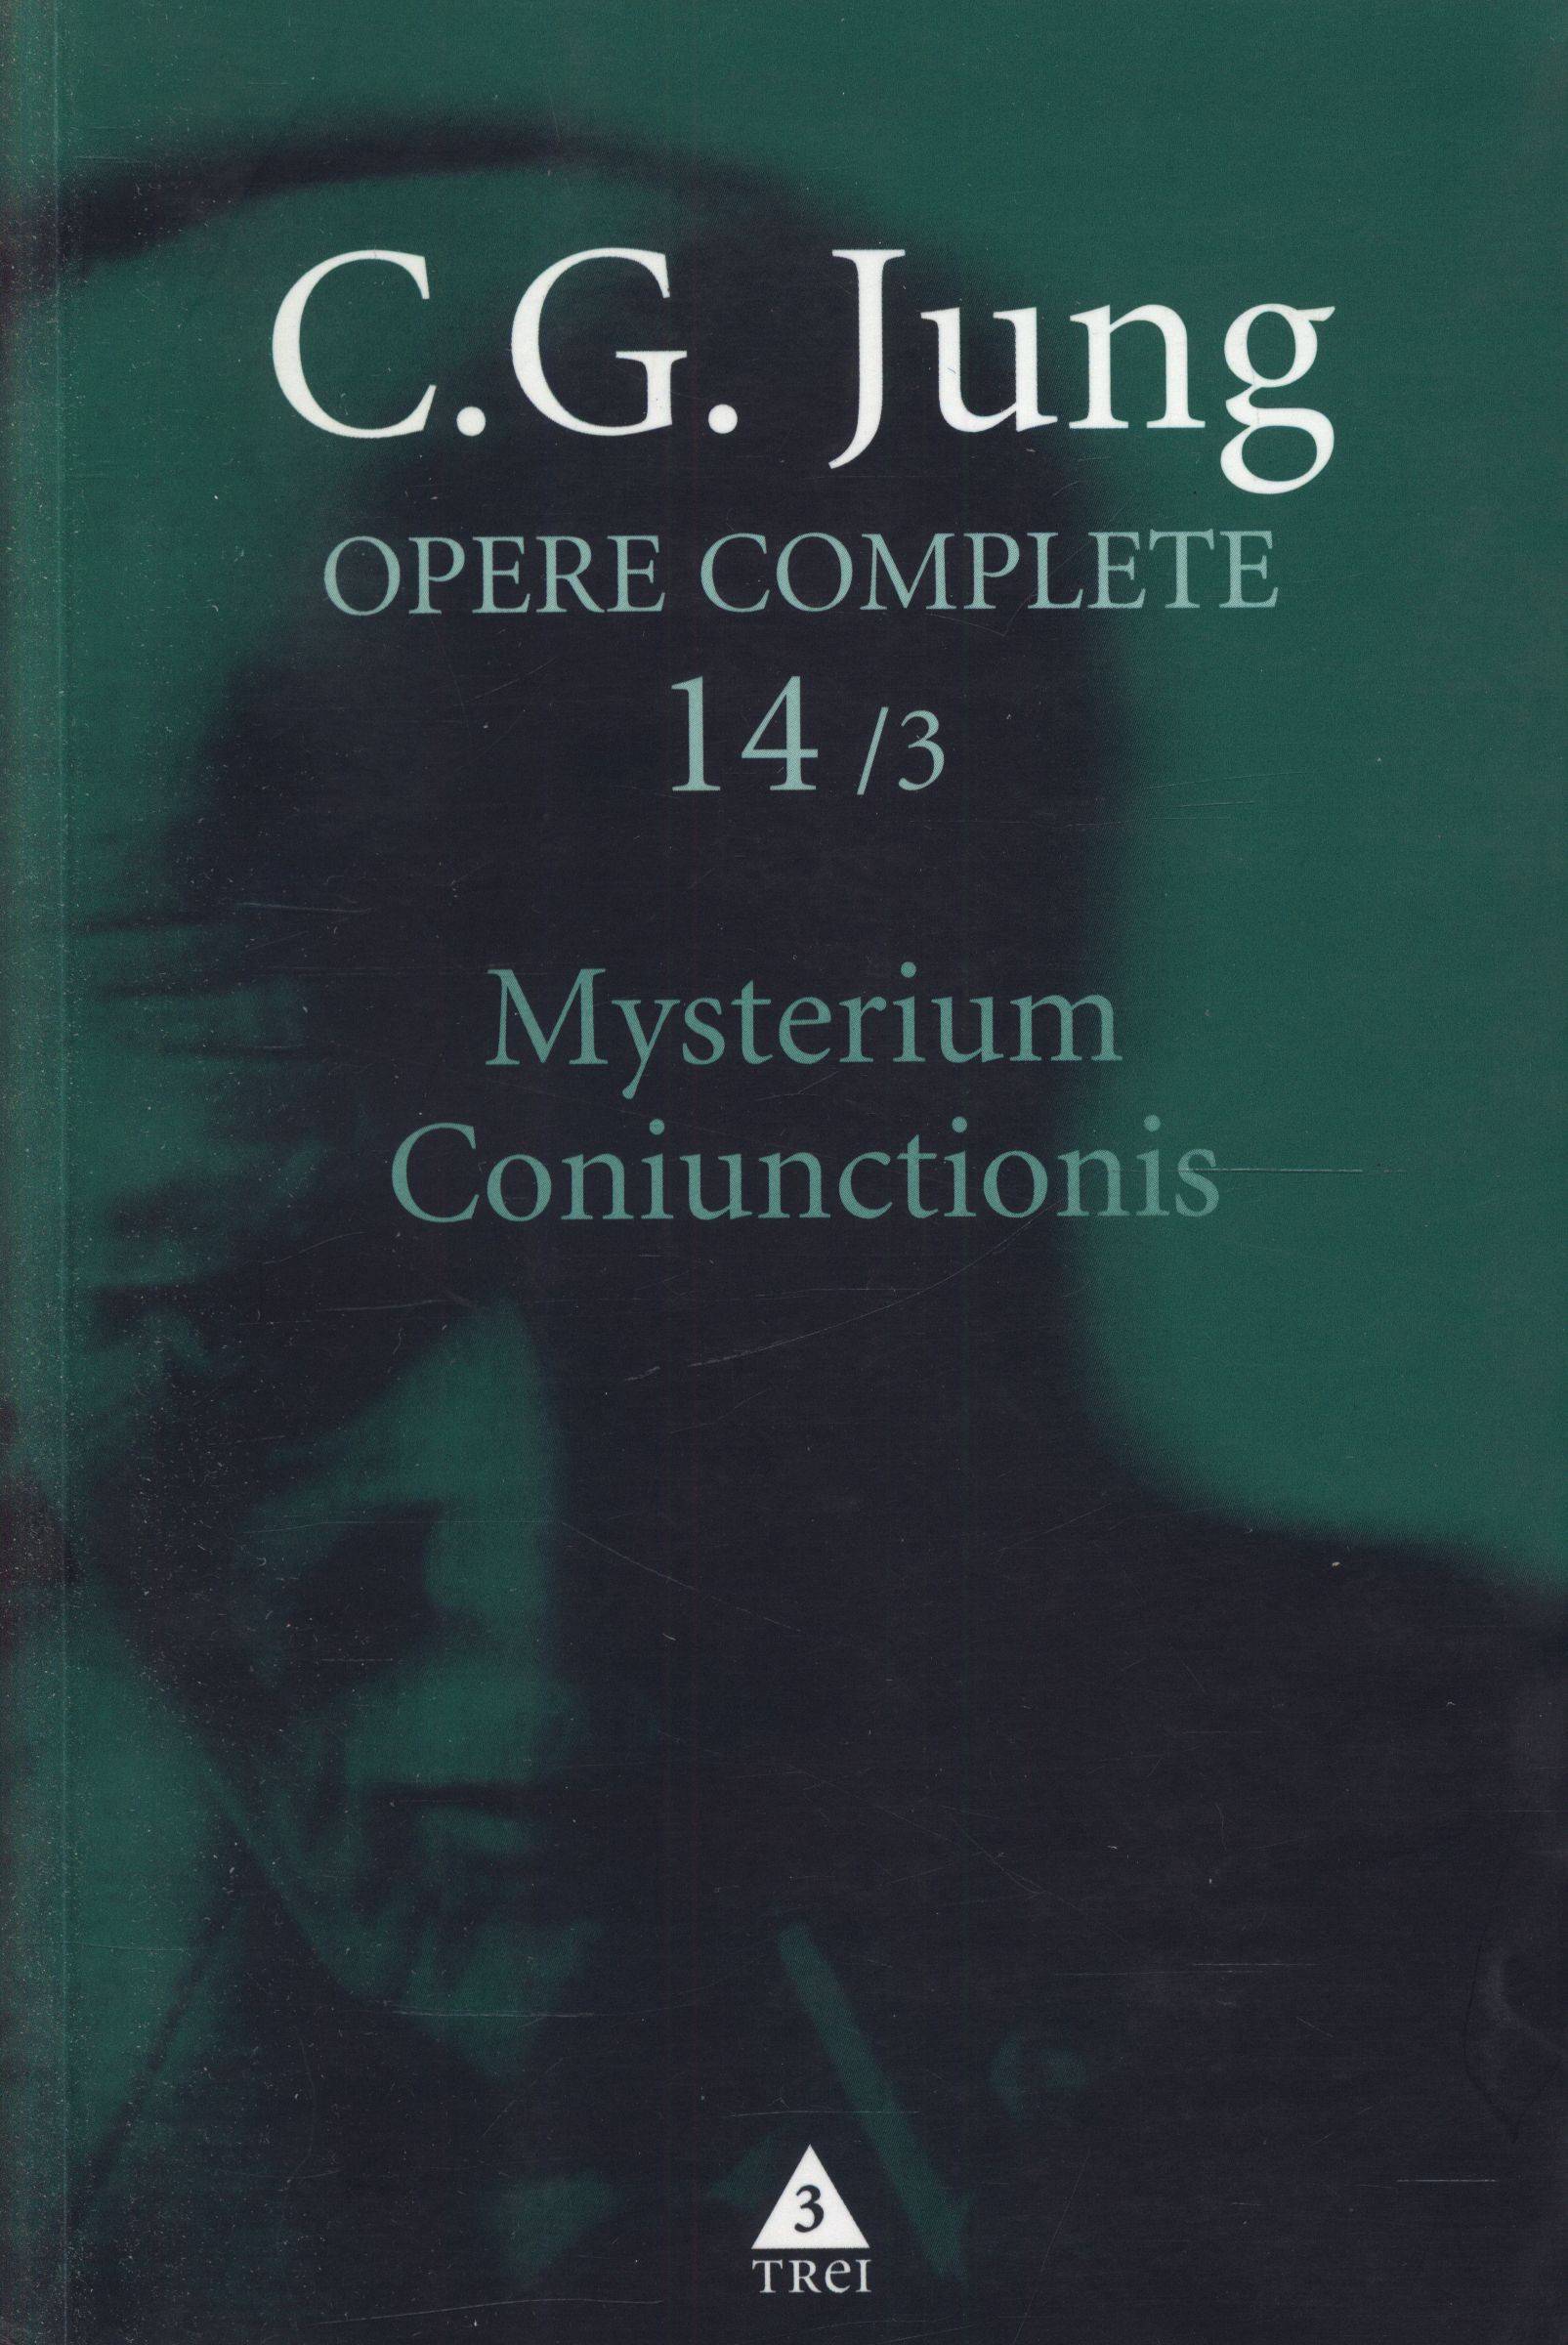 Opere complete 14/3: Mysterium Coniunctionis - C.G. Jung